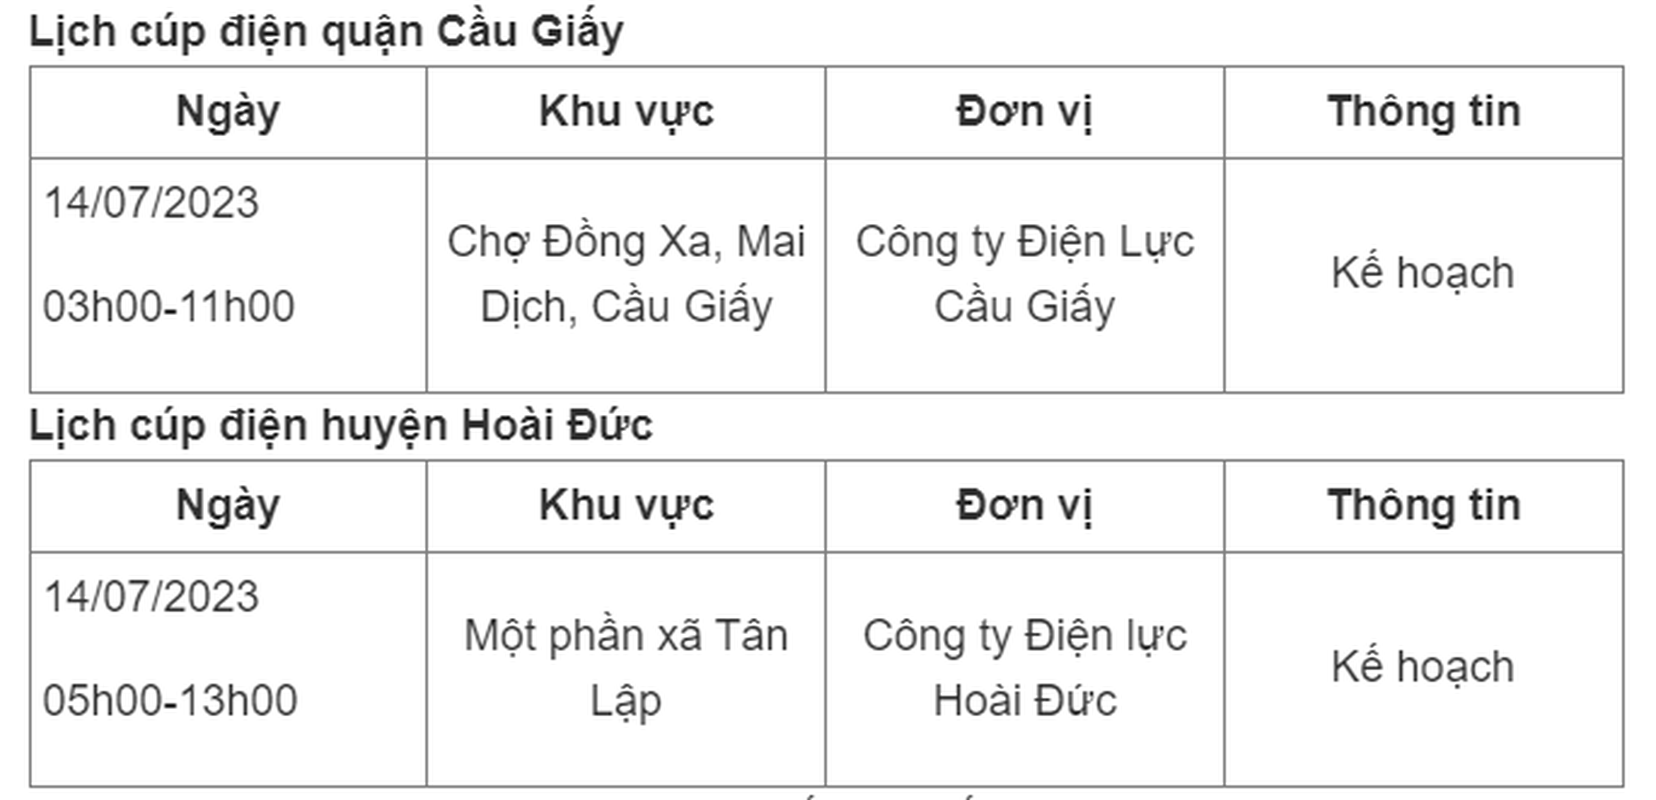 Lich cup dien Ha Noi ngay 14/7/2023: Nhieu noi bi cup tu 3h sang-Hinh-7